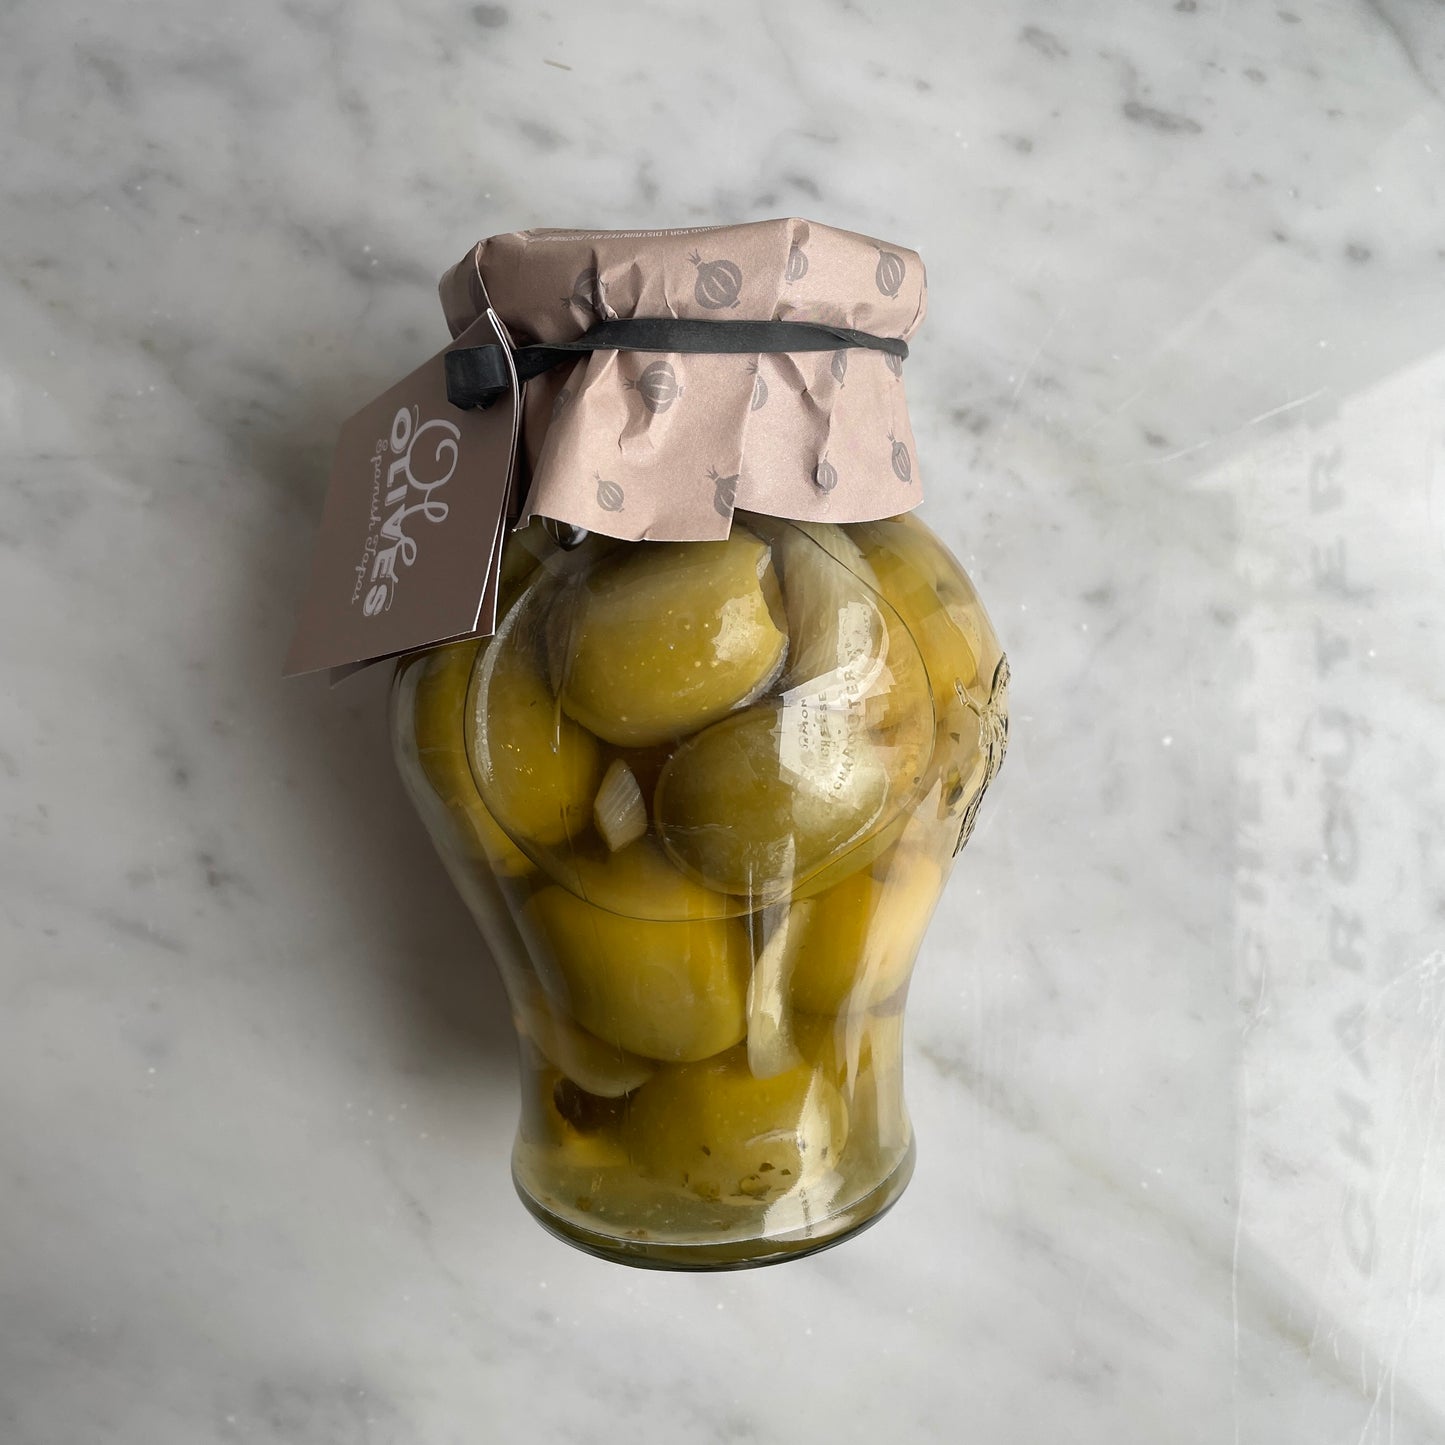 Almond stuffed Gordal Olives in amphora